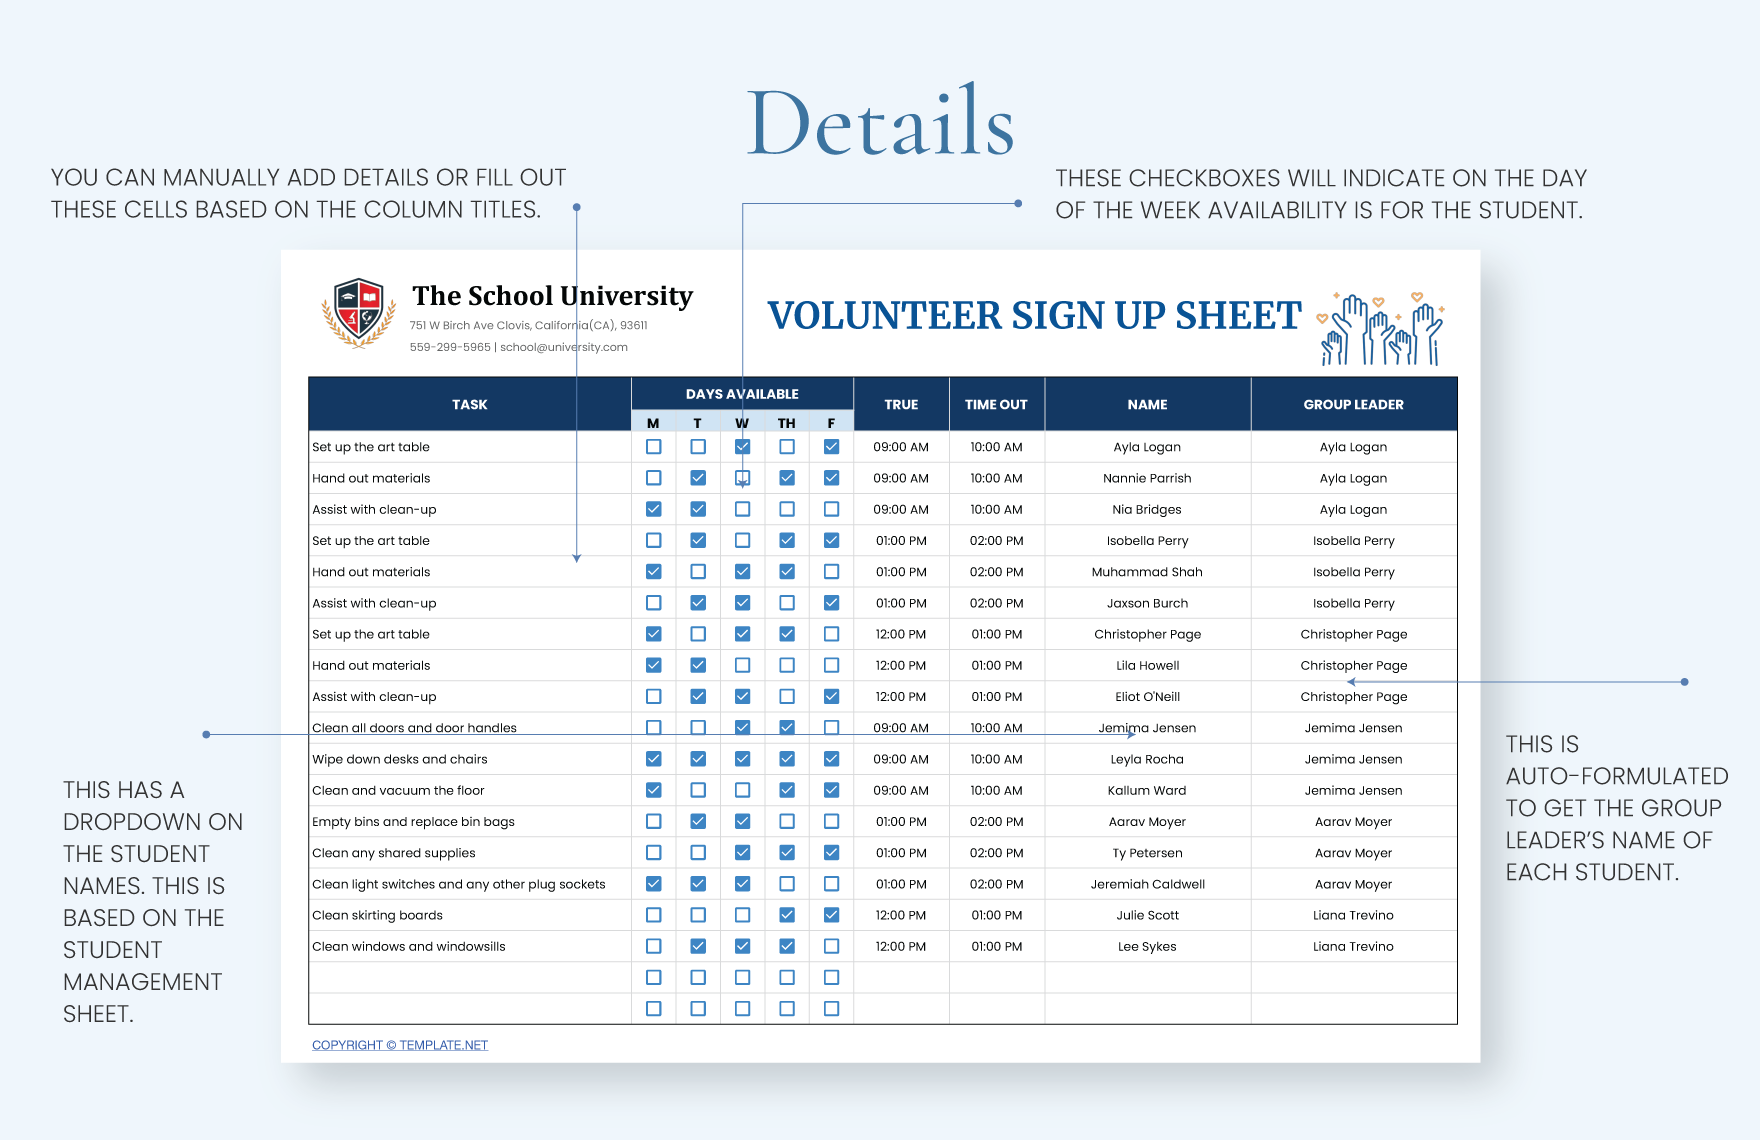 Classroom Volunteer Sign-Up Sheet